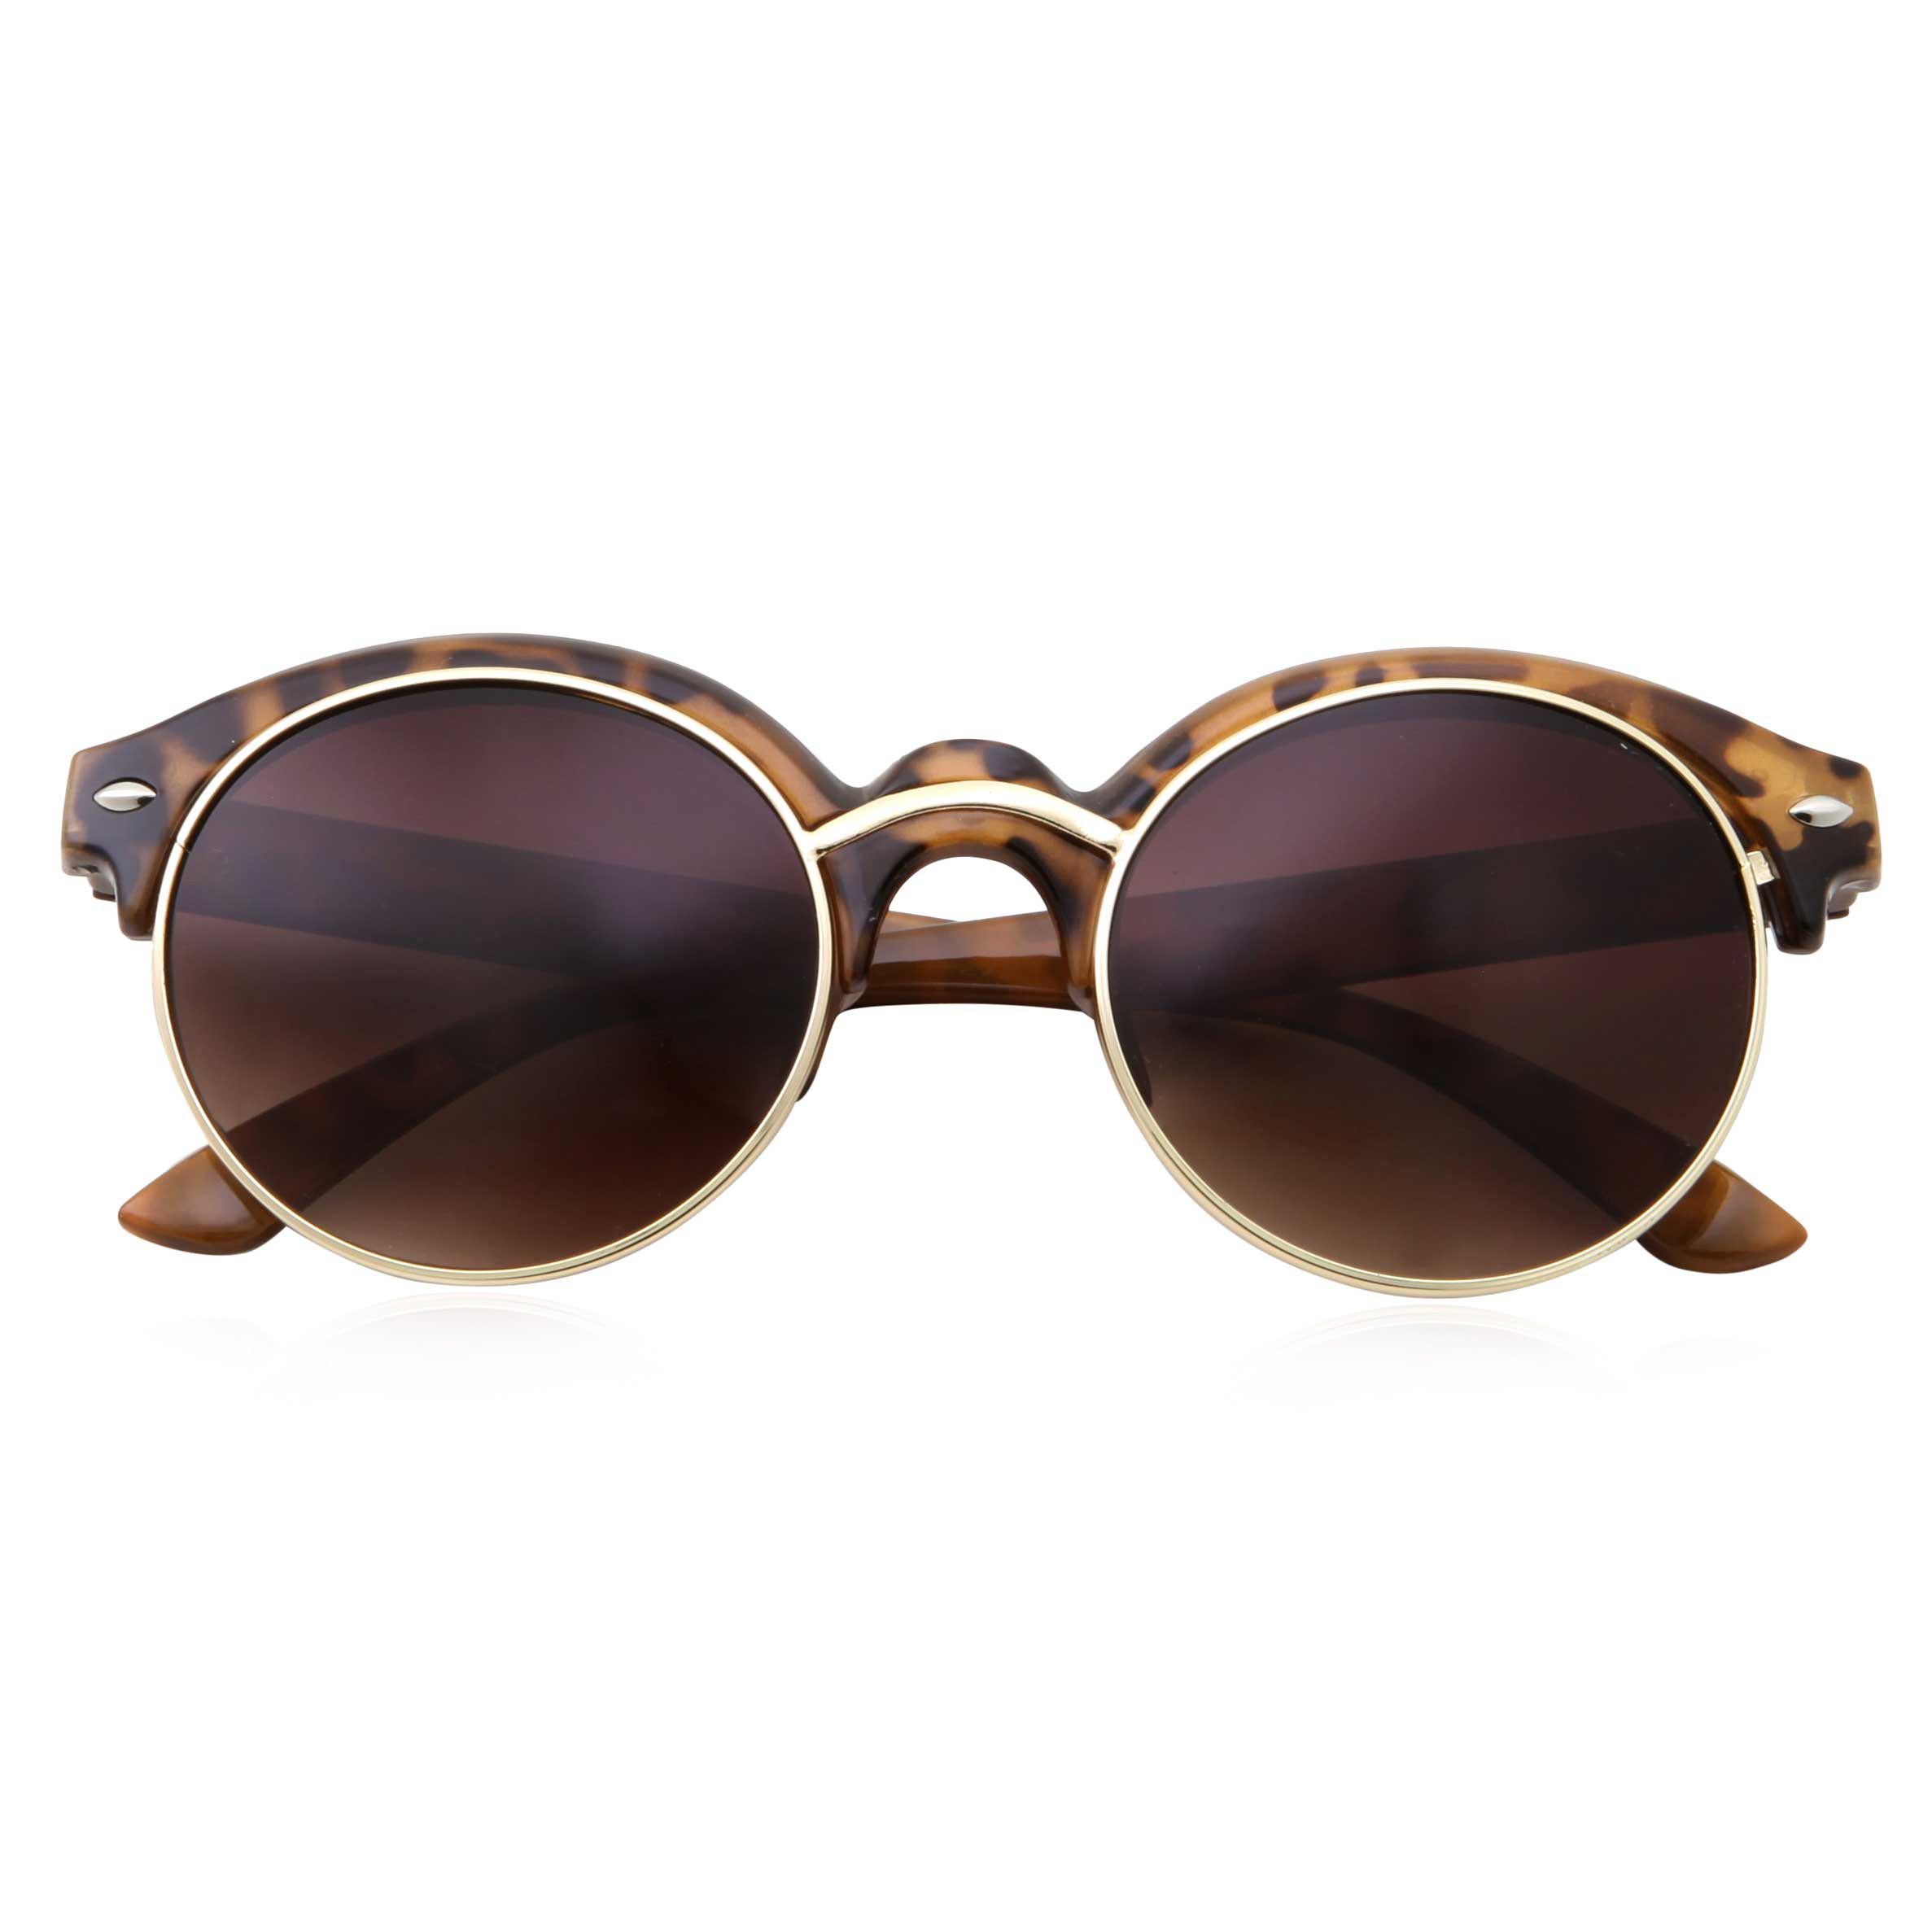 grinderPUNCH Classic Vintage Horned Rim Round Frame Adult Sunglasses for Men Women, Tortoise - image 2 of 5